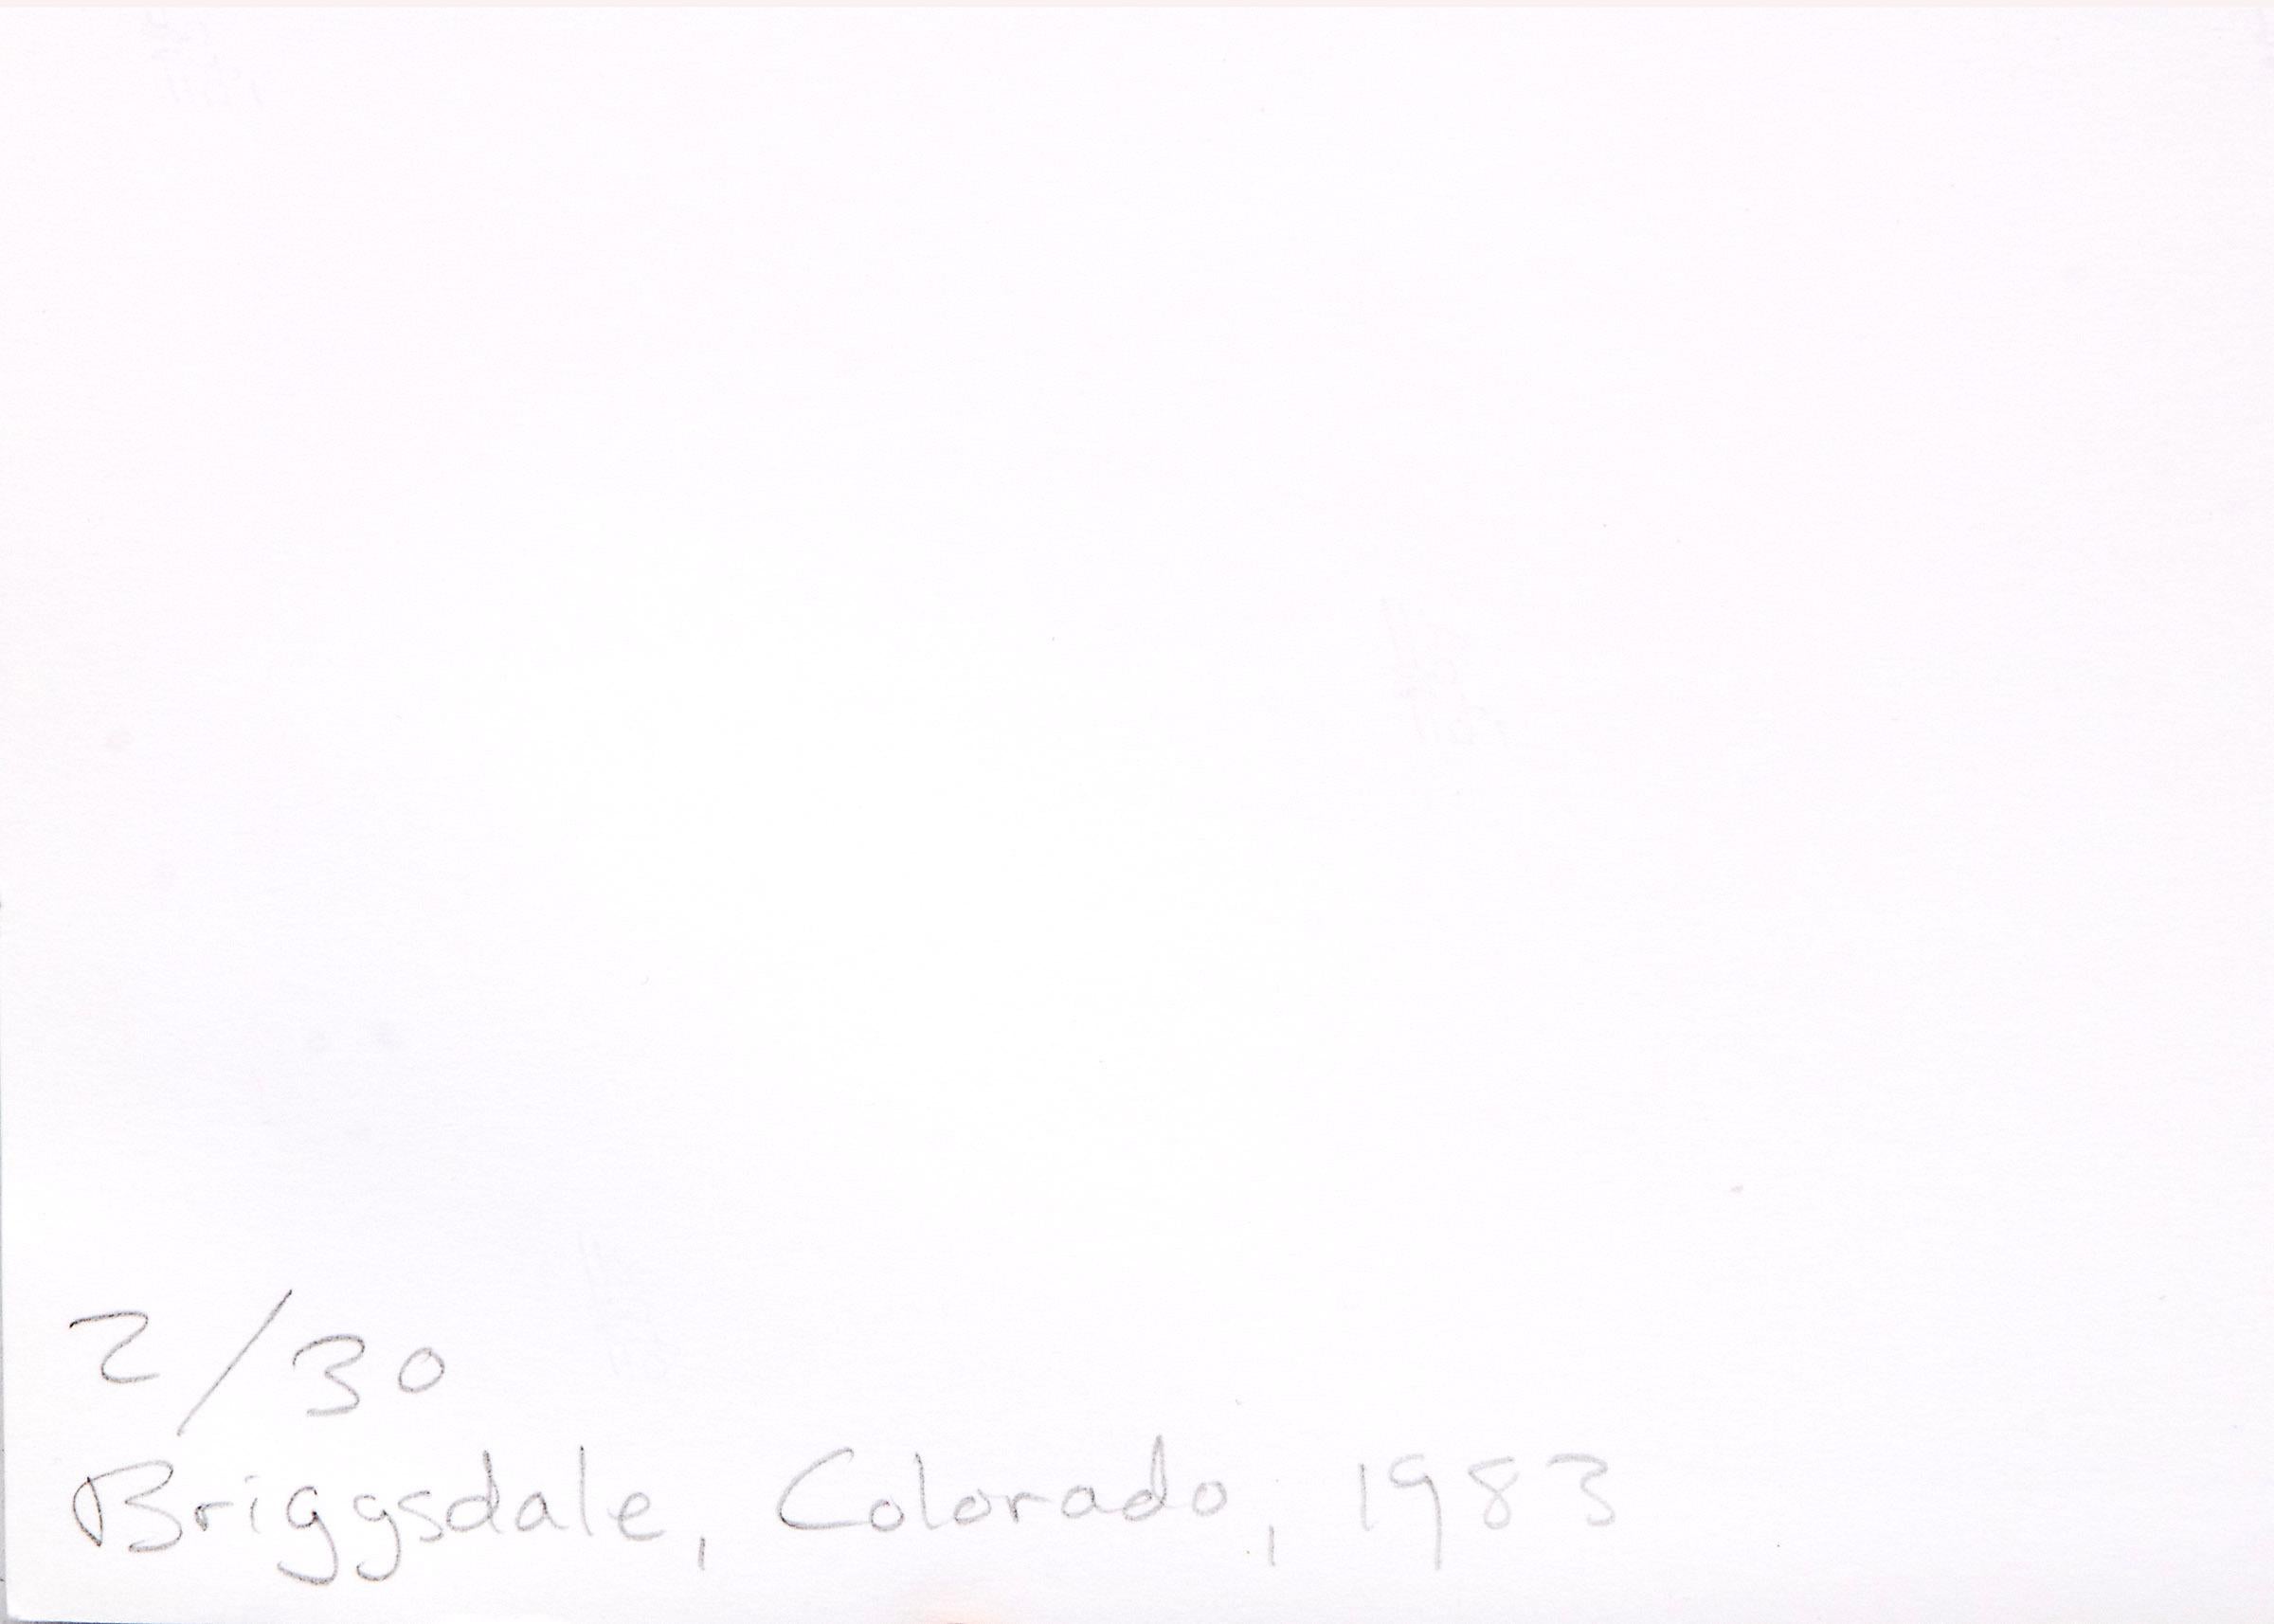 Edge of Briggsdale, Colorado, 'Missouri West' series, Black & White Landscape - Gray Landscape Photograph by Robert Adams